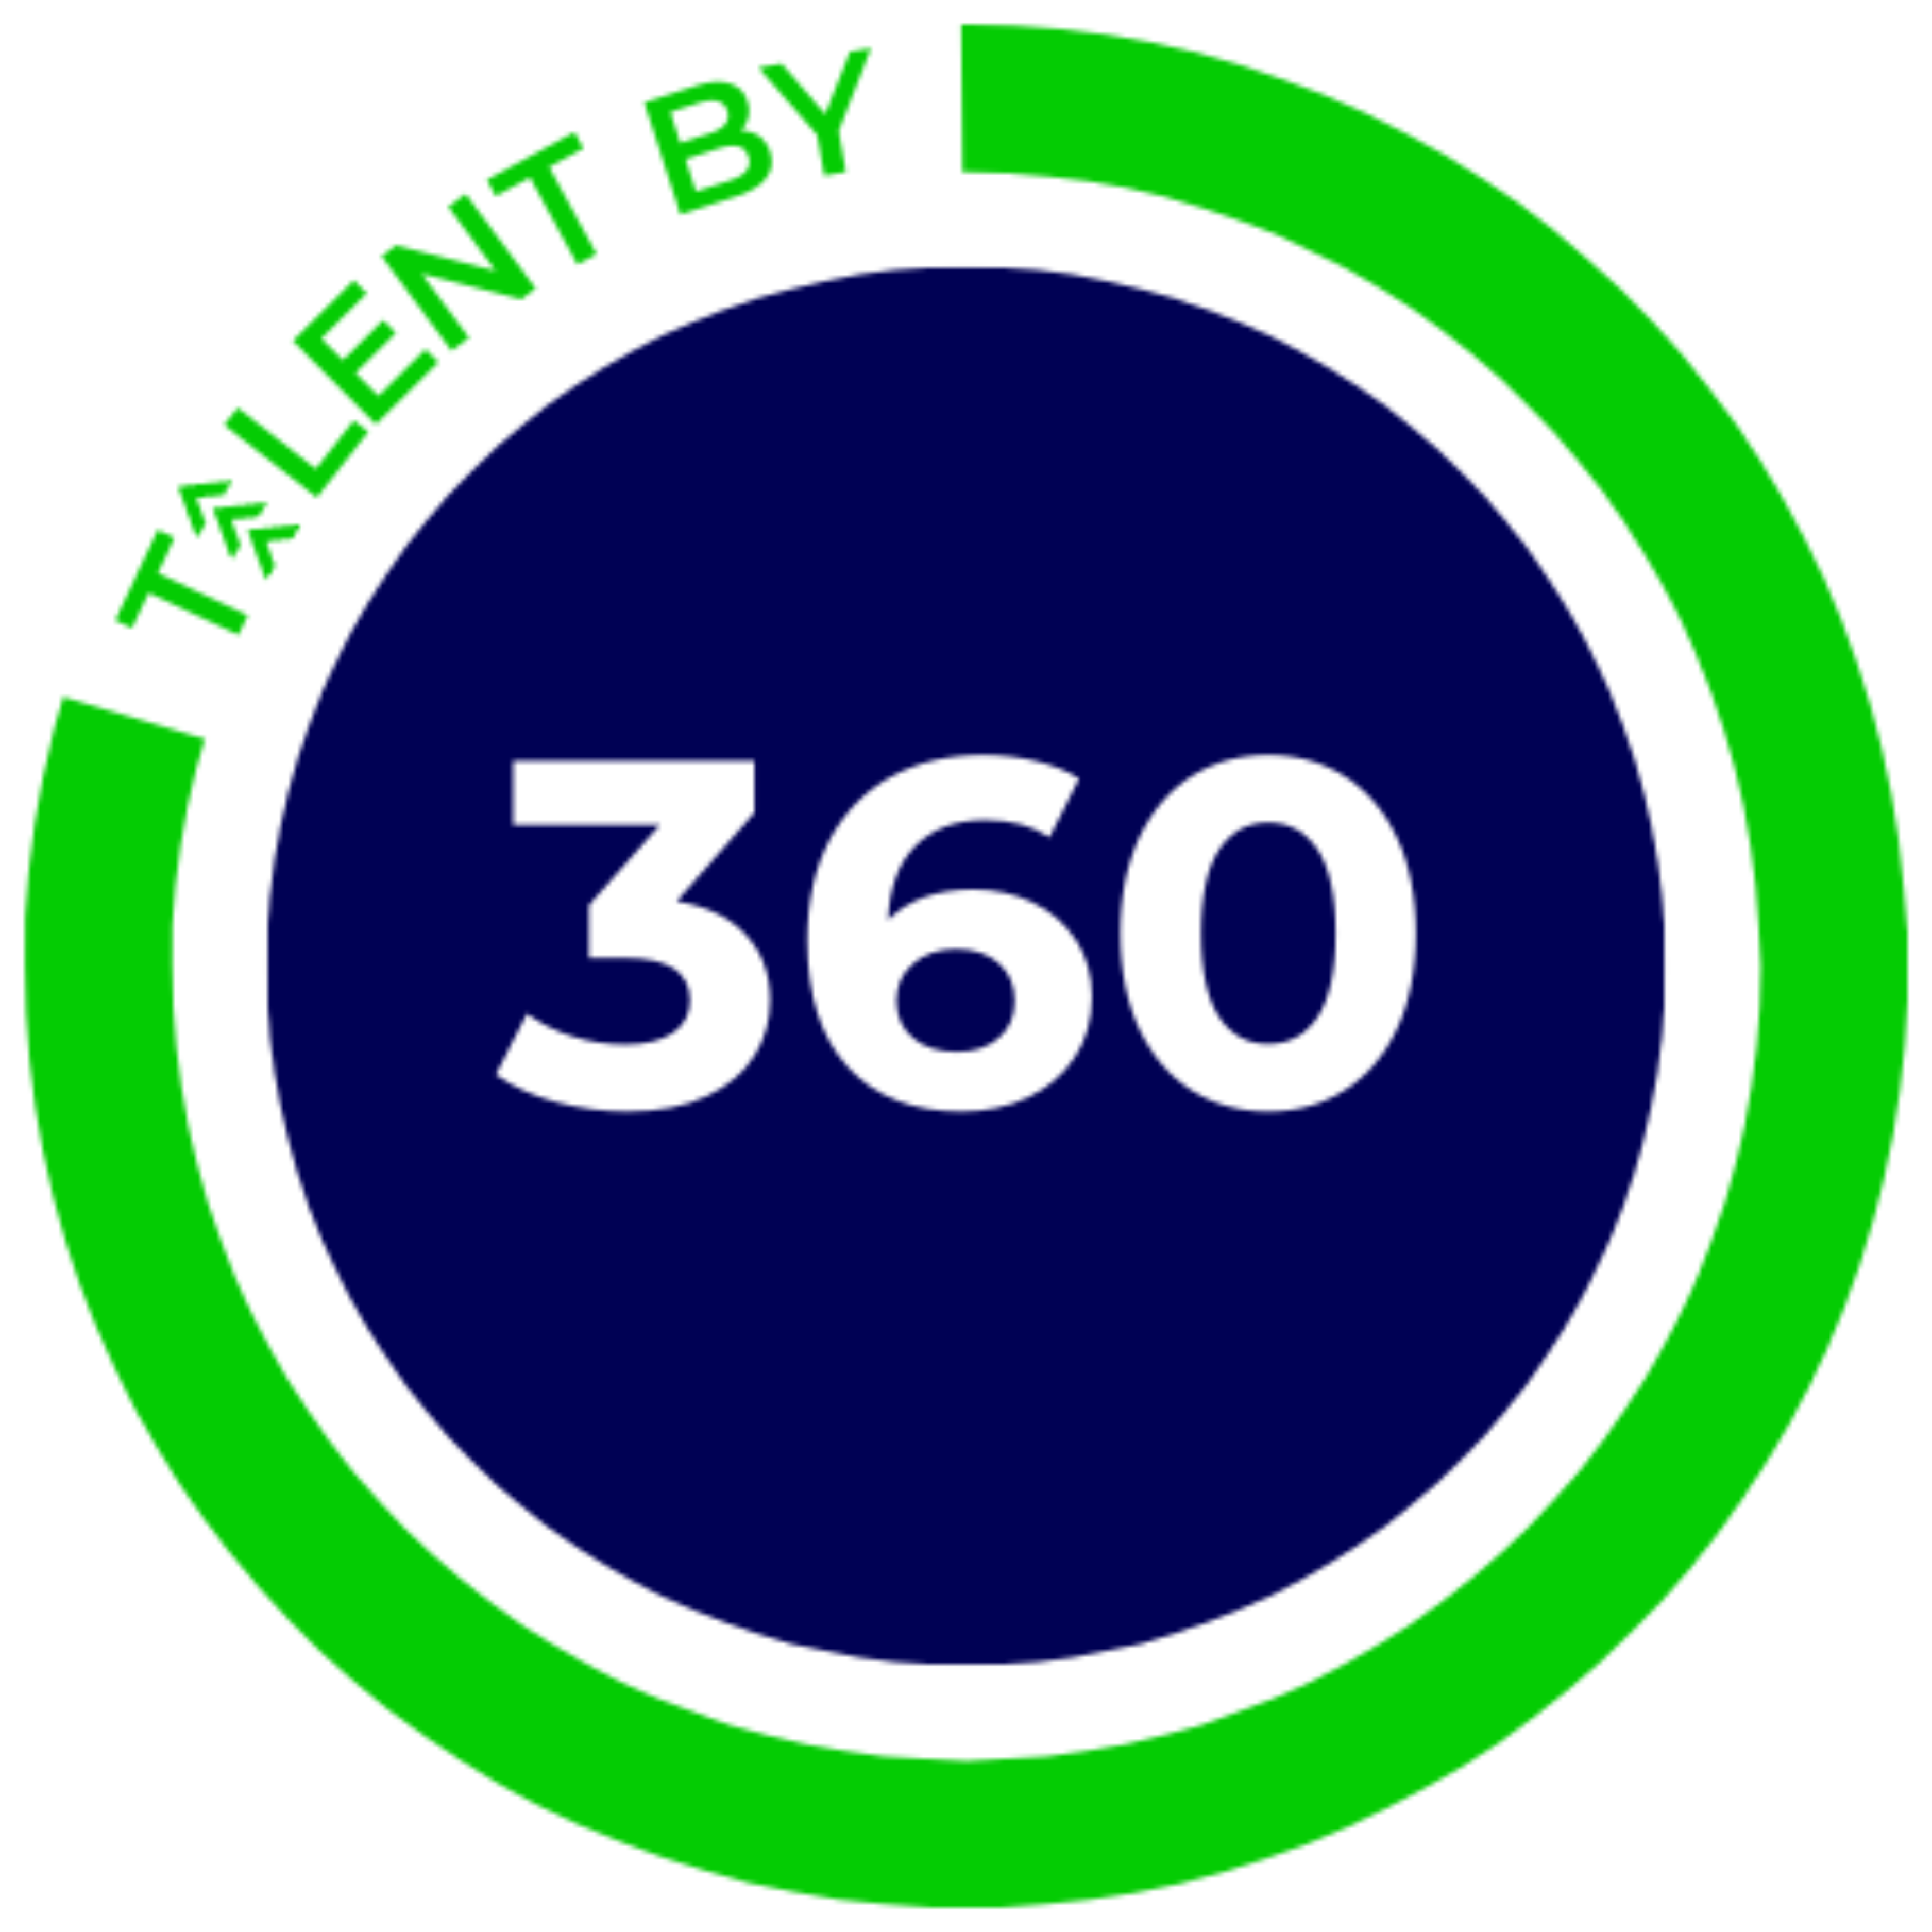 TalentBy360